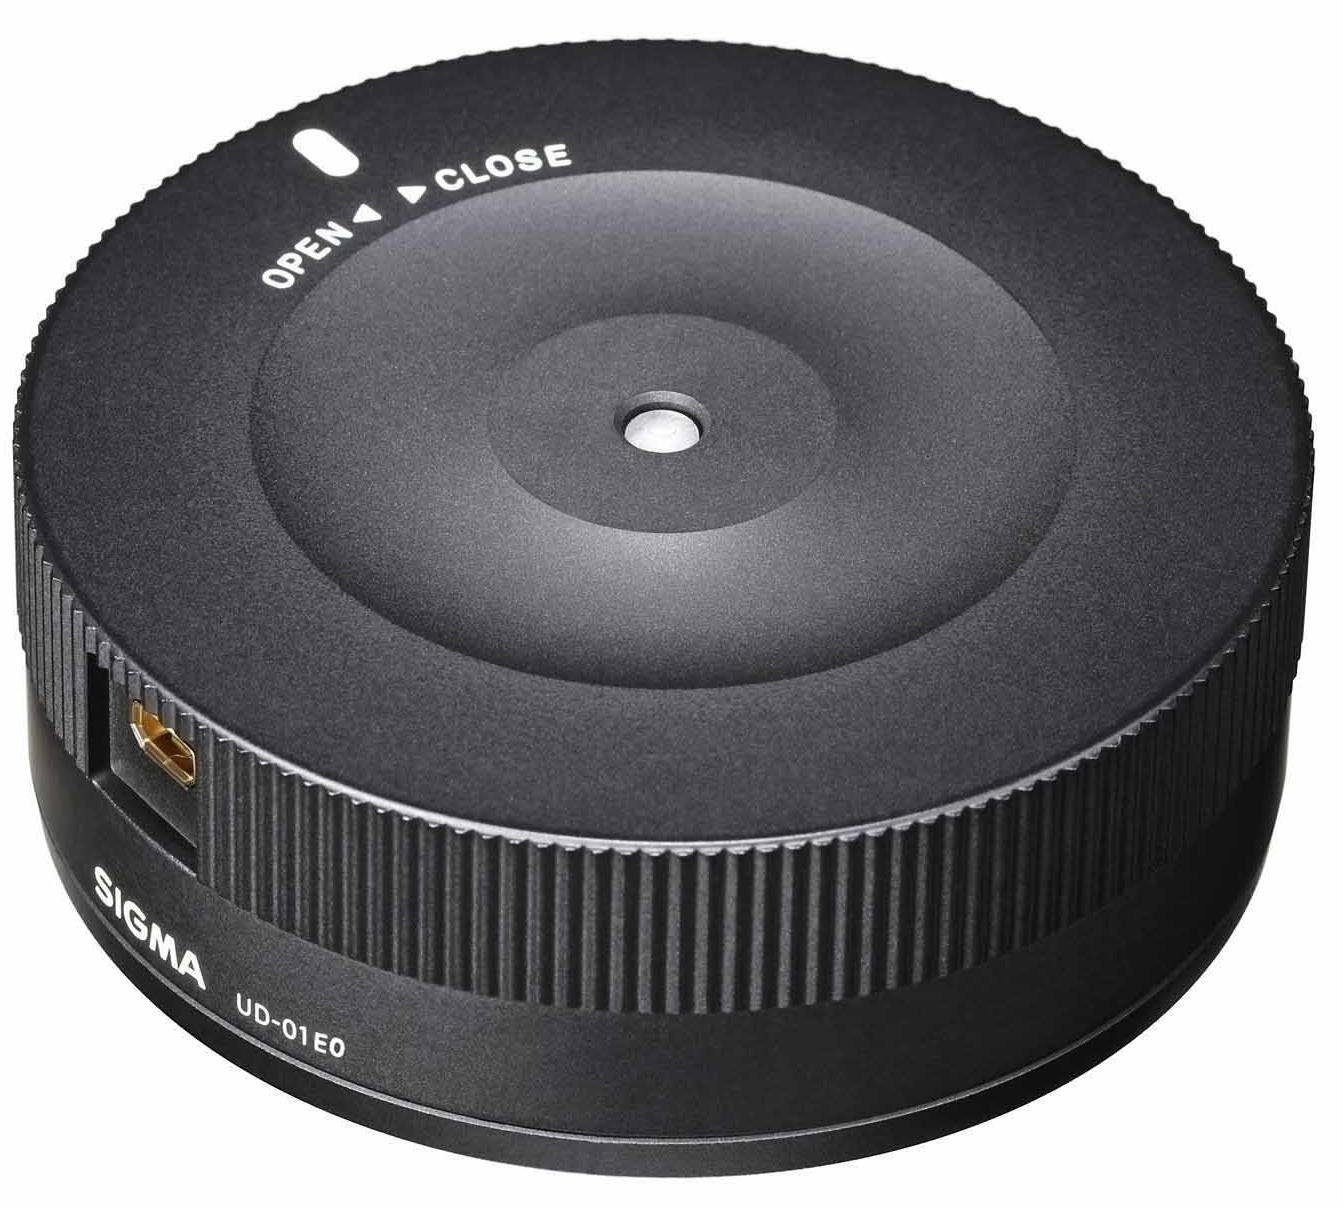 SIGMA USB Dock Canon Objektivbajonett Objektivzubehör schwarz